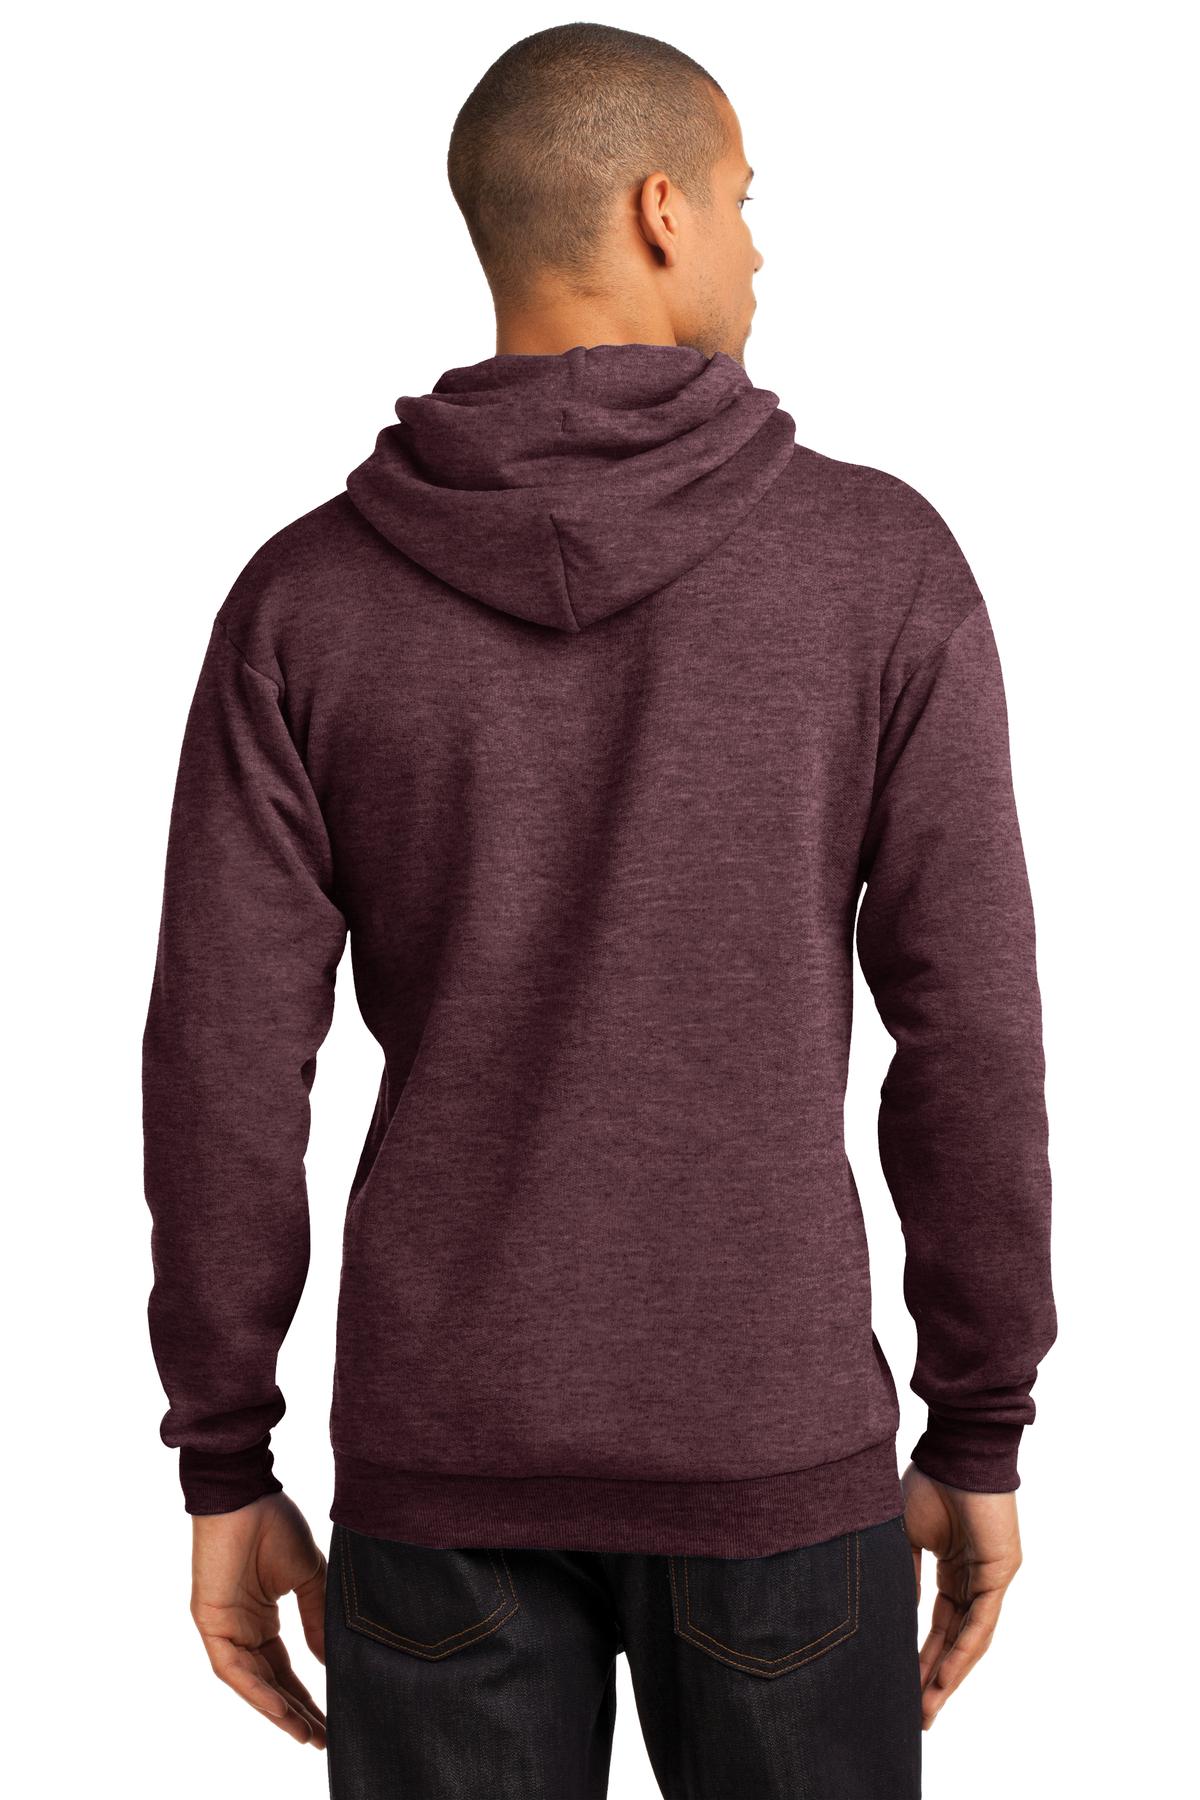 Port & Company® - Core Fleece Pullover Hooded Sweatshirt. PC78H [Heather Athletic Maroon] - DFW Impression